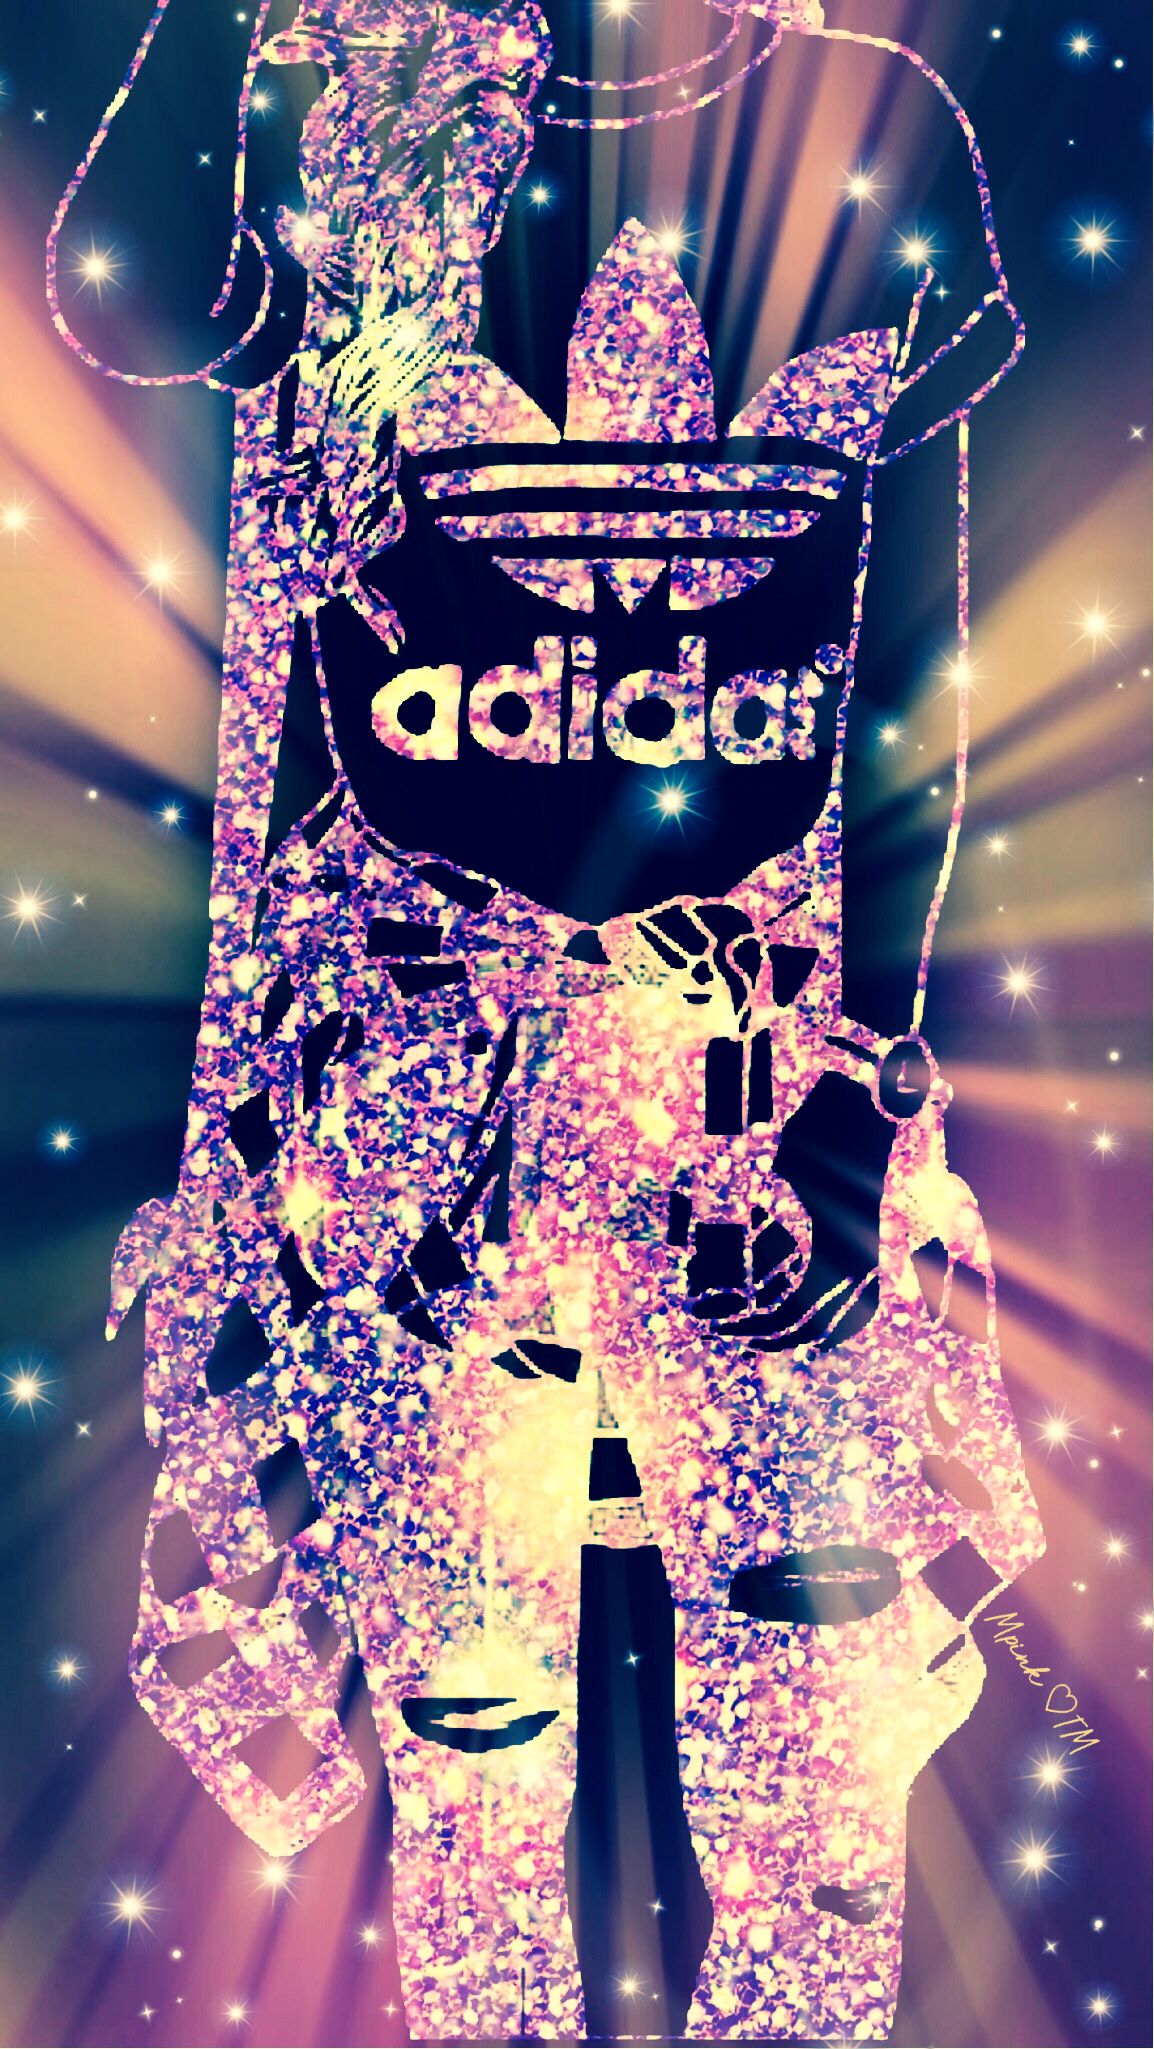 Adidas Girl Galaxy Wallpaper #androidwallpaper #iphonewallpaper #wallpaper # galaxy #sparkle #glitte. Adidas wallpaper iphone, Adidas wallpaper, Sparkle wallpaper